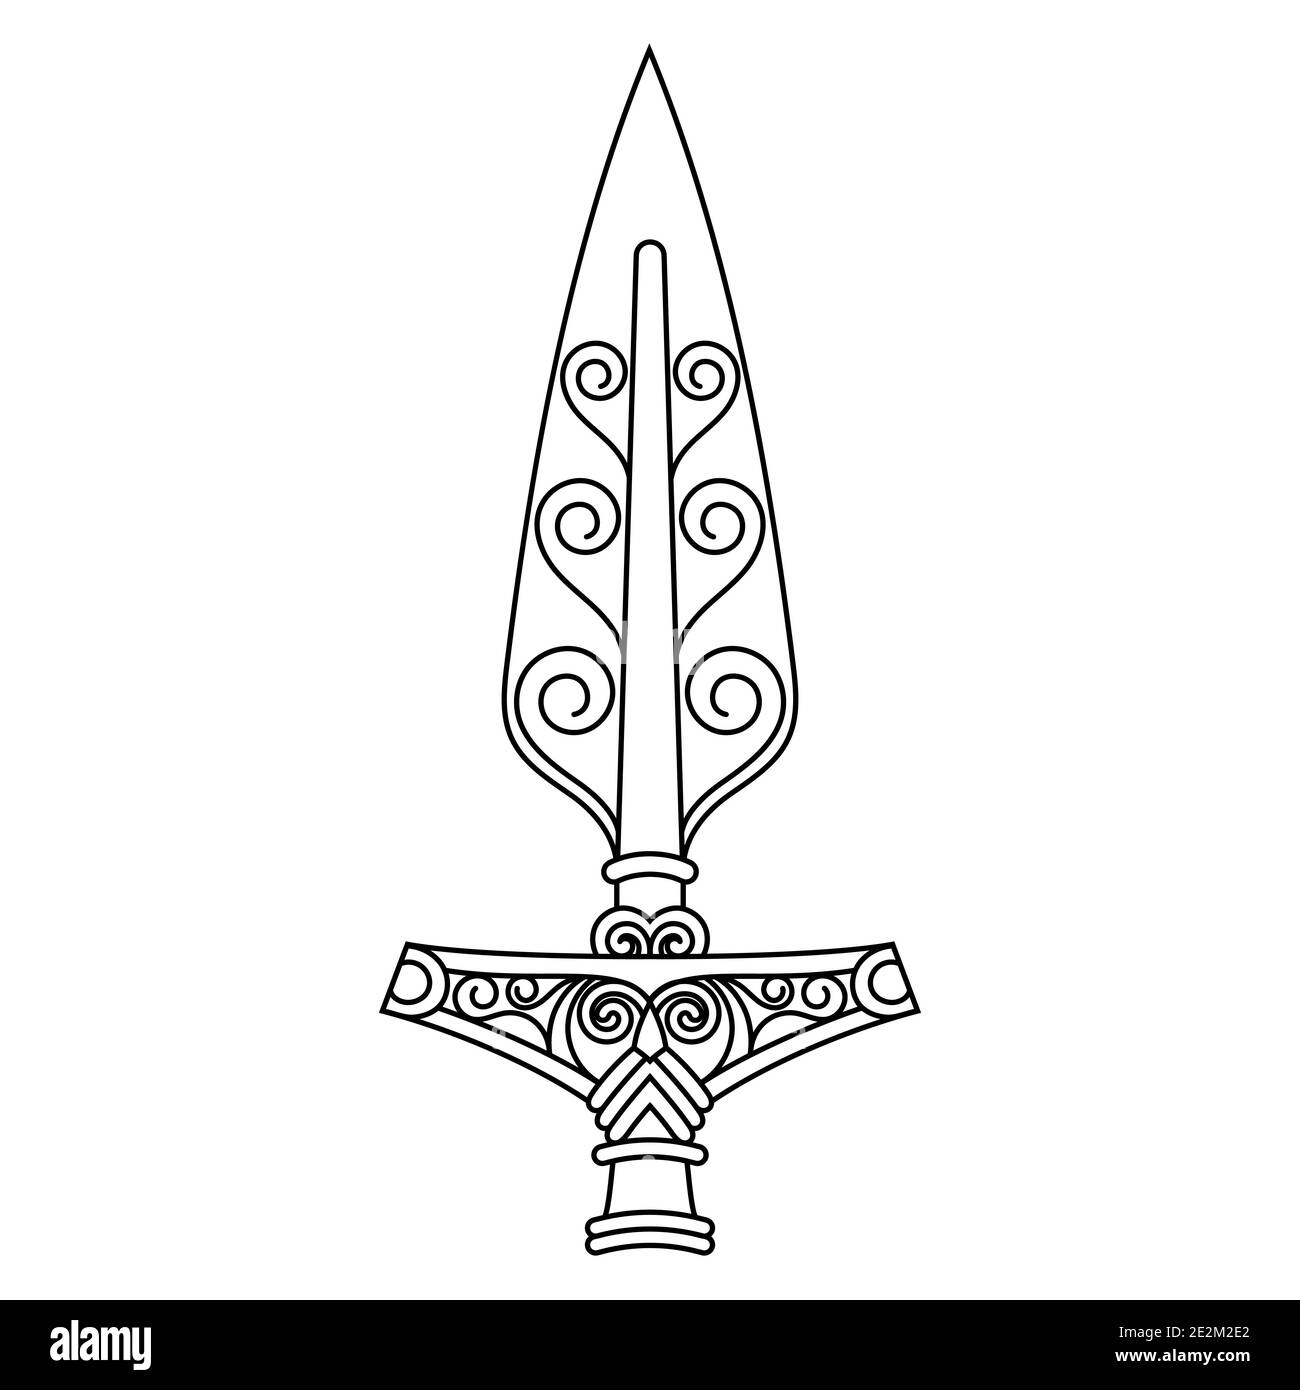 The Spear of the God Odin  Gungnir Two Wolves and Scandinavian Pattern  Stock Vector  Illustration of gungnir freki 180477419